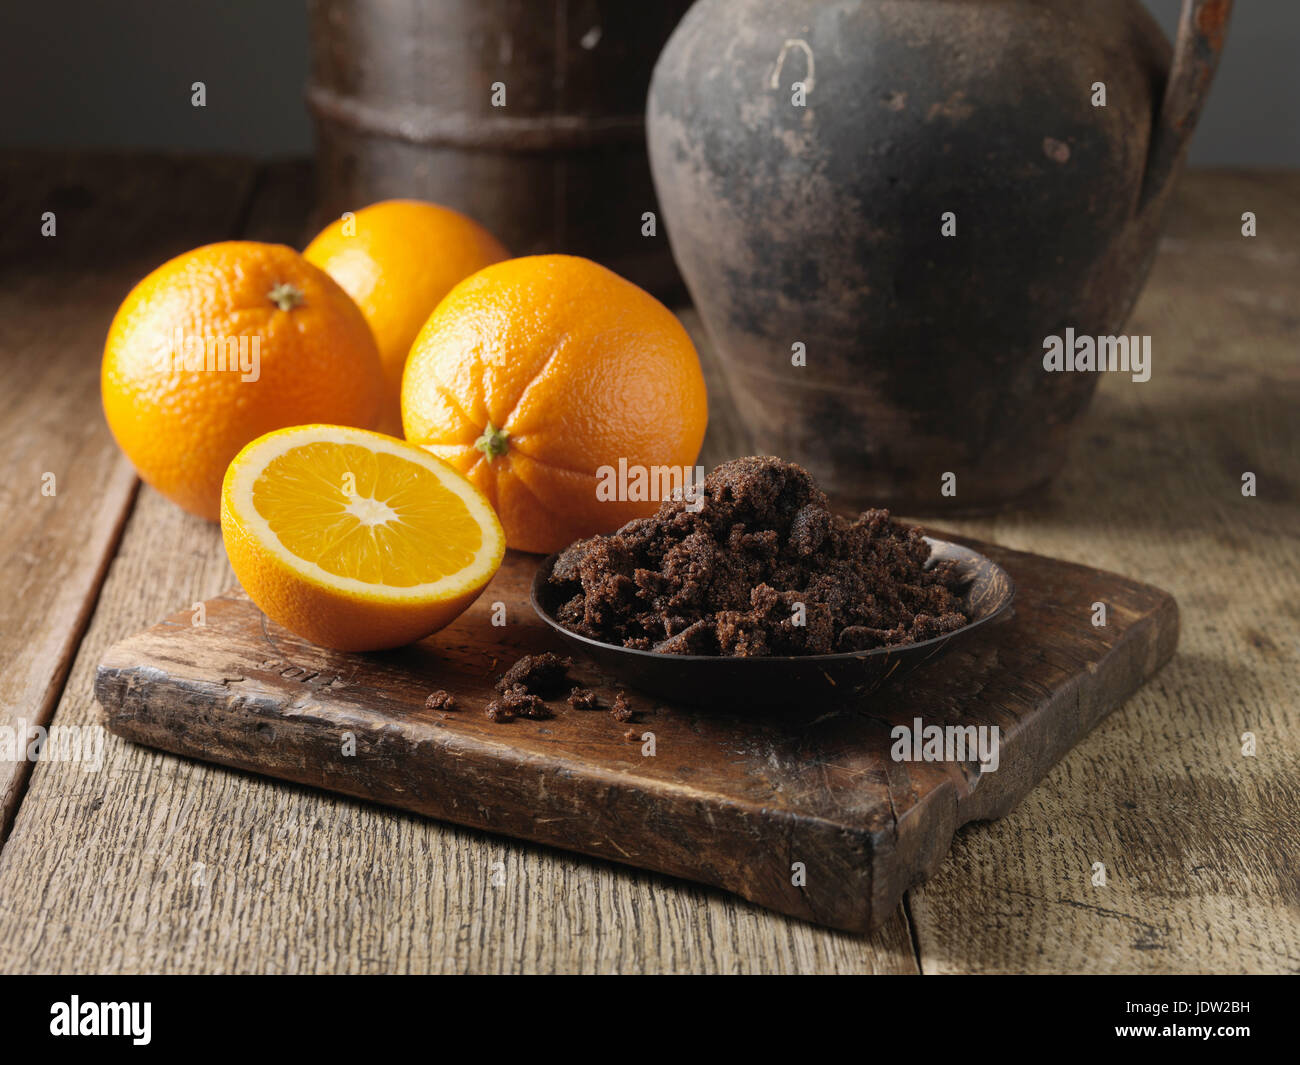 Plate of dark sugar and oranges Stock Photo